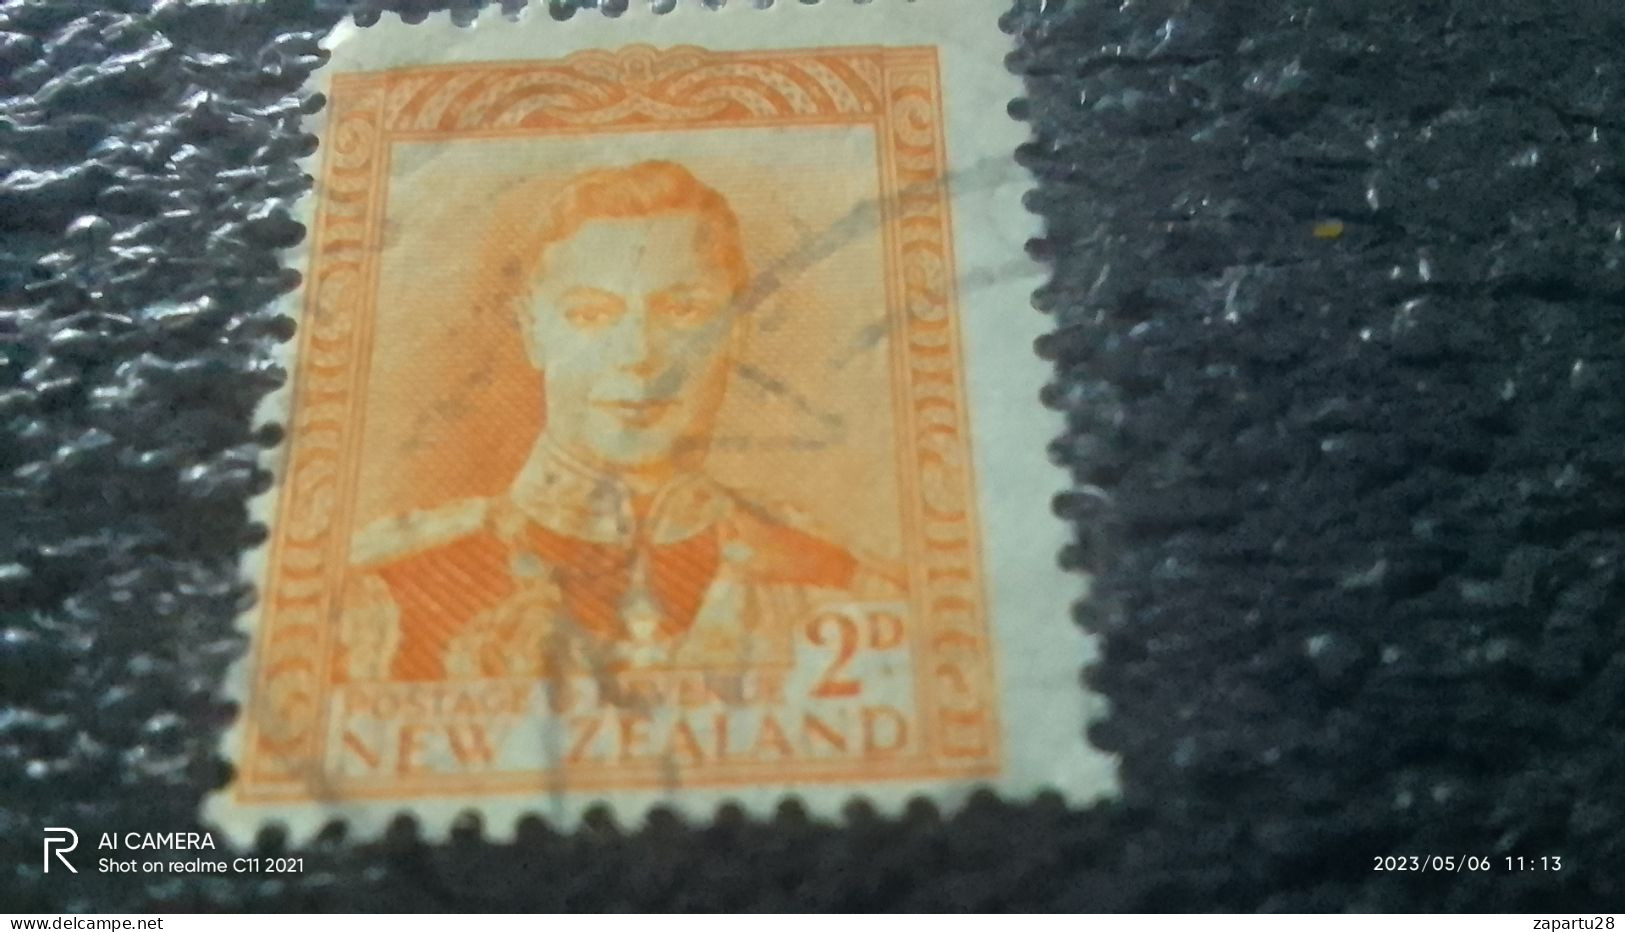 YENİ ZELANDA-  1938         2P               KİNG GEORGE VI          USED - Used Stamps